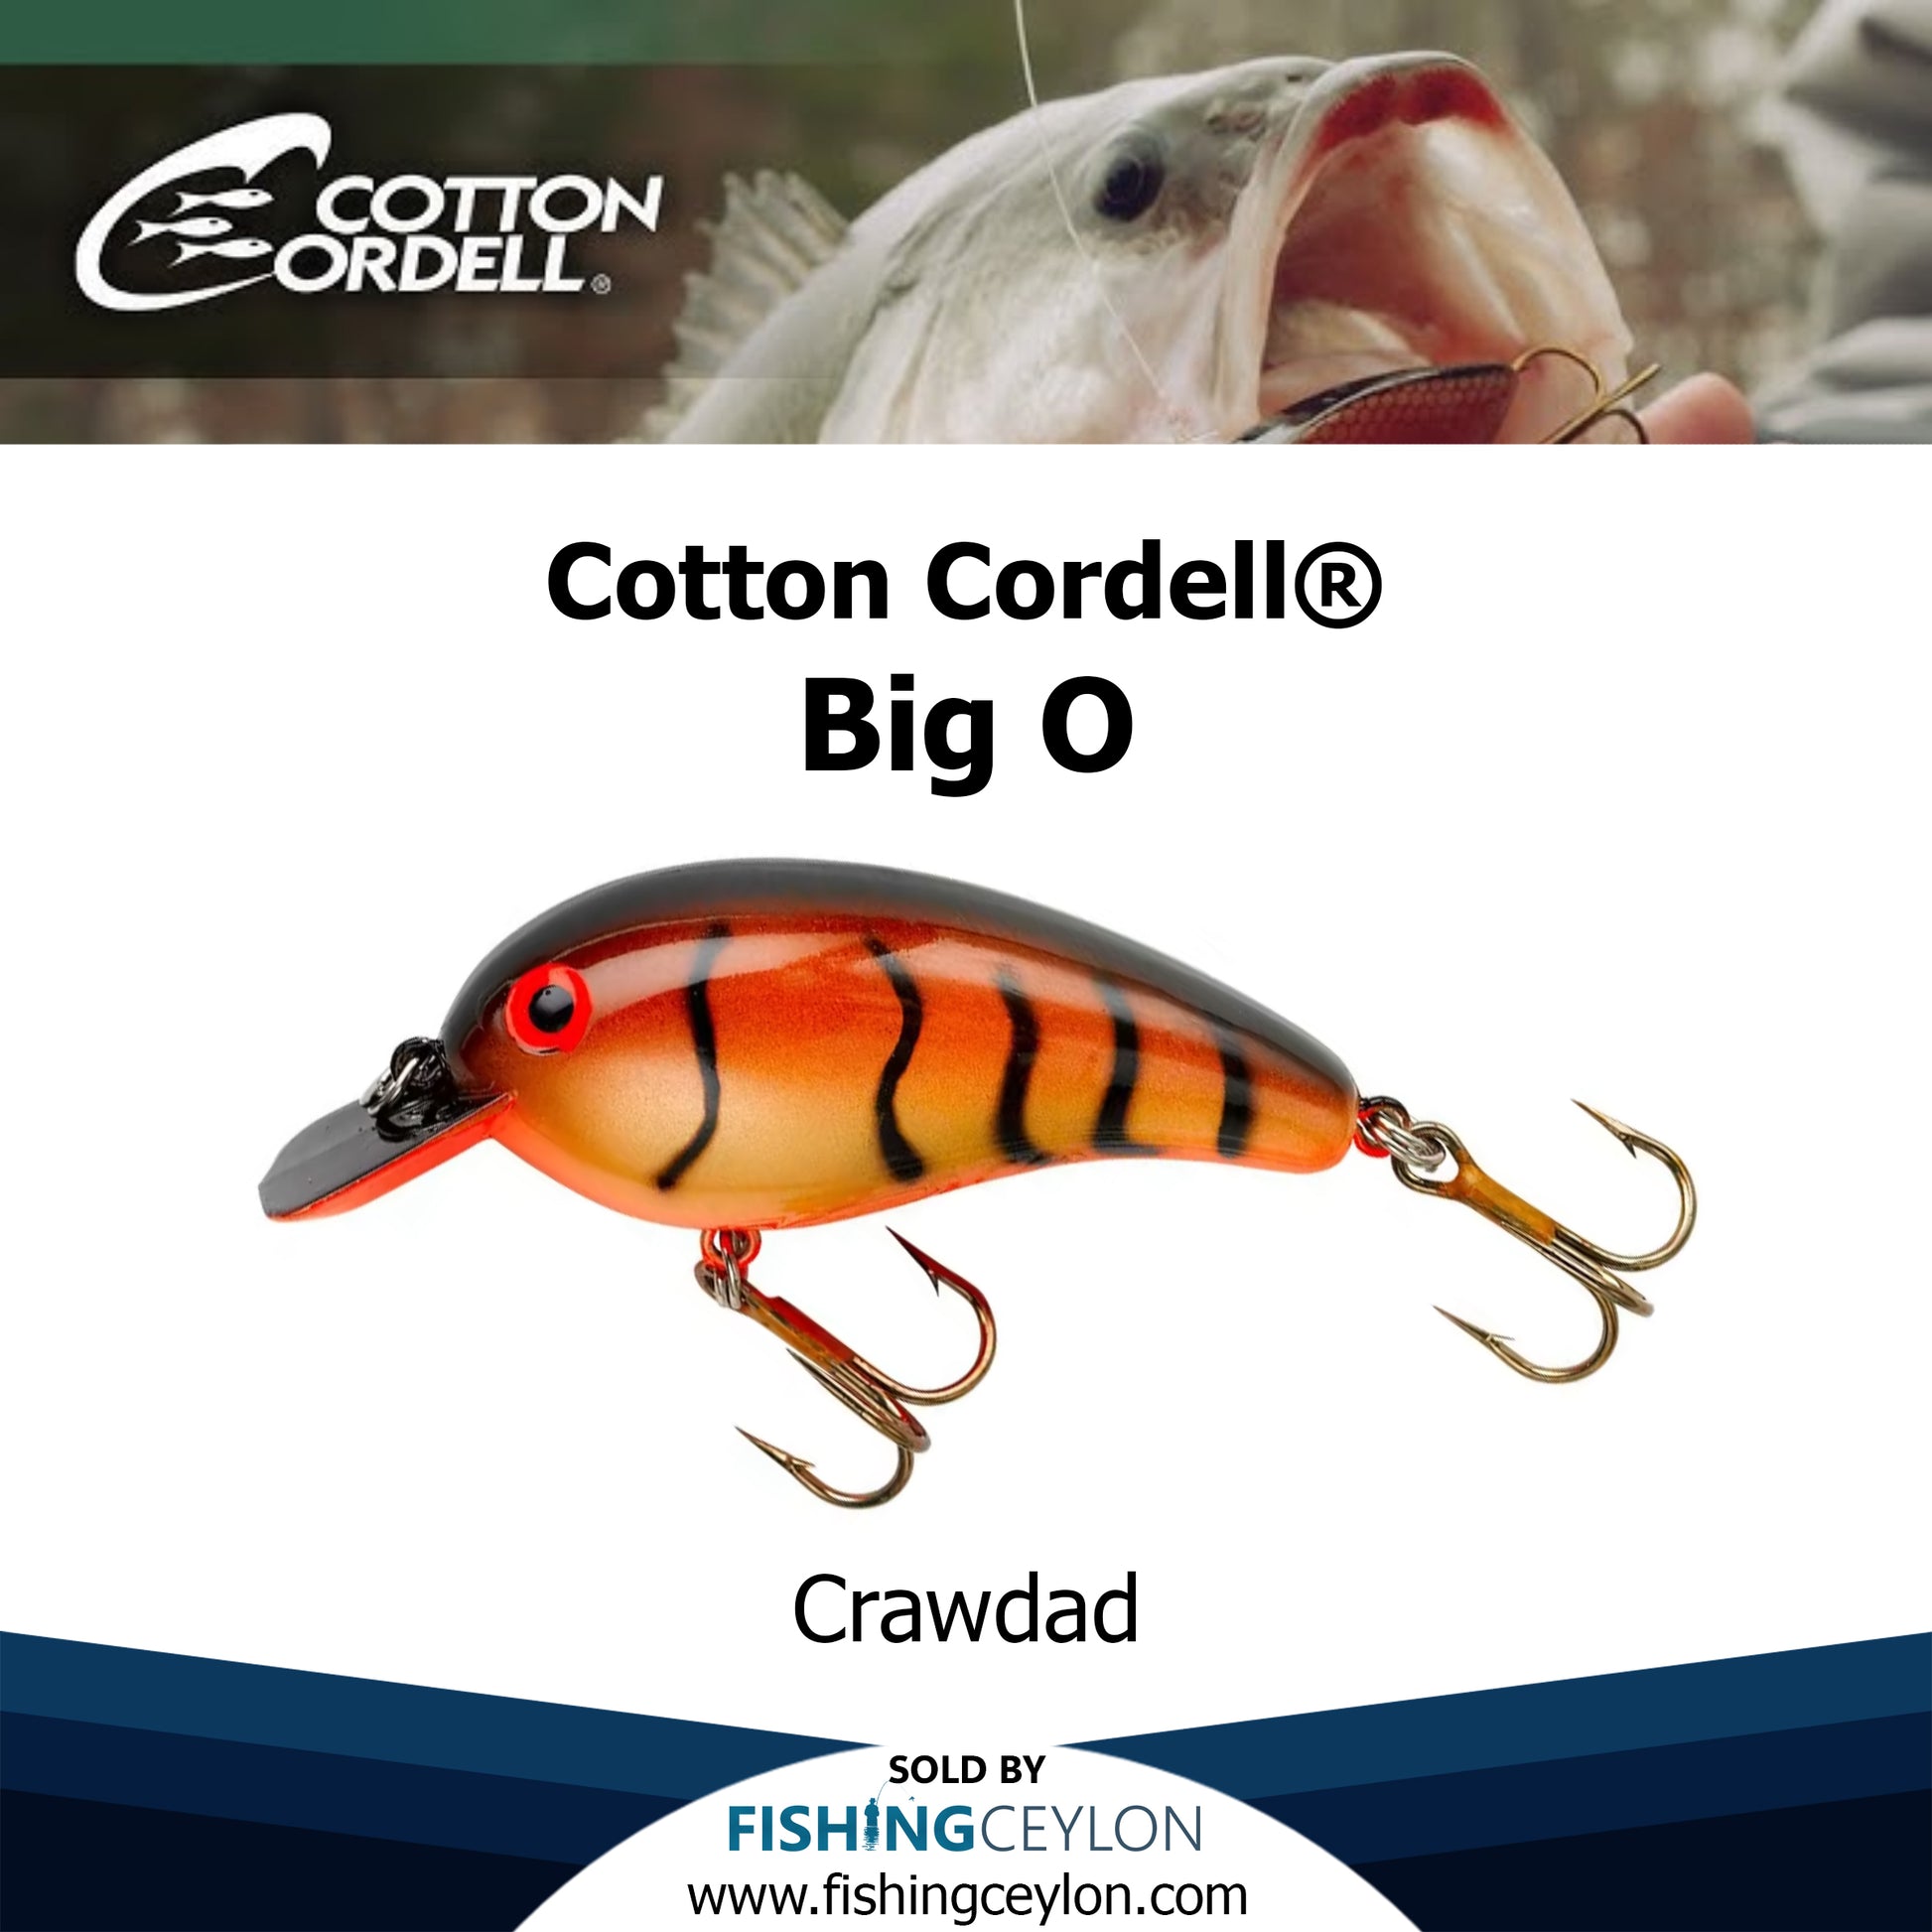  Cotton Cordell Big O